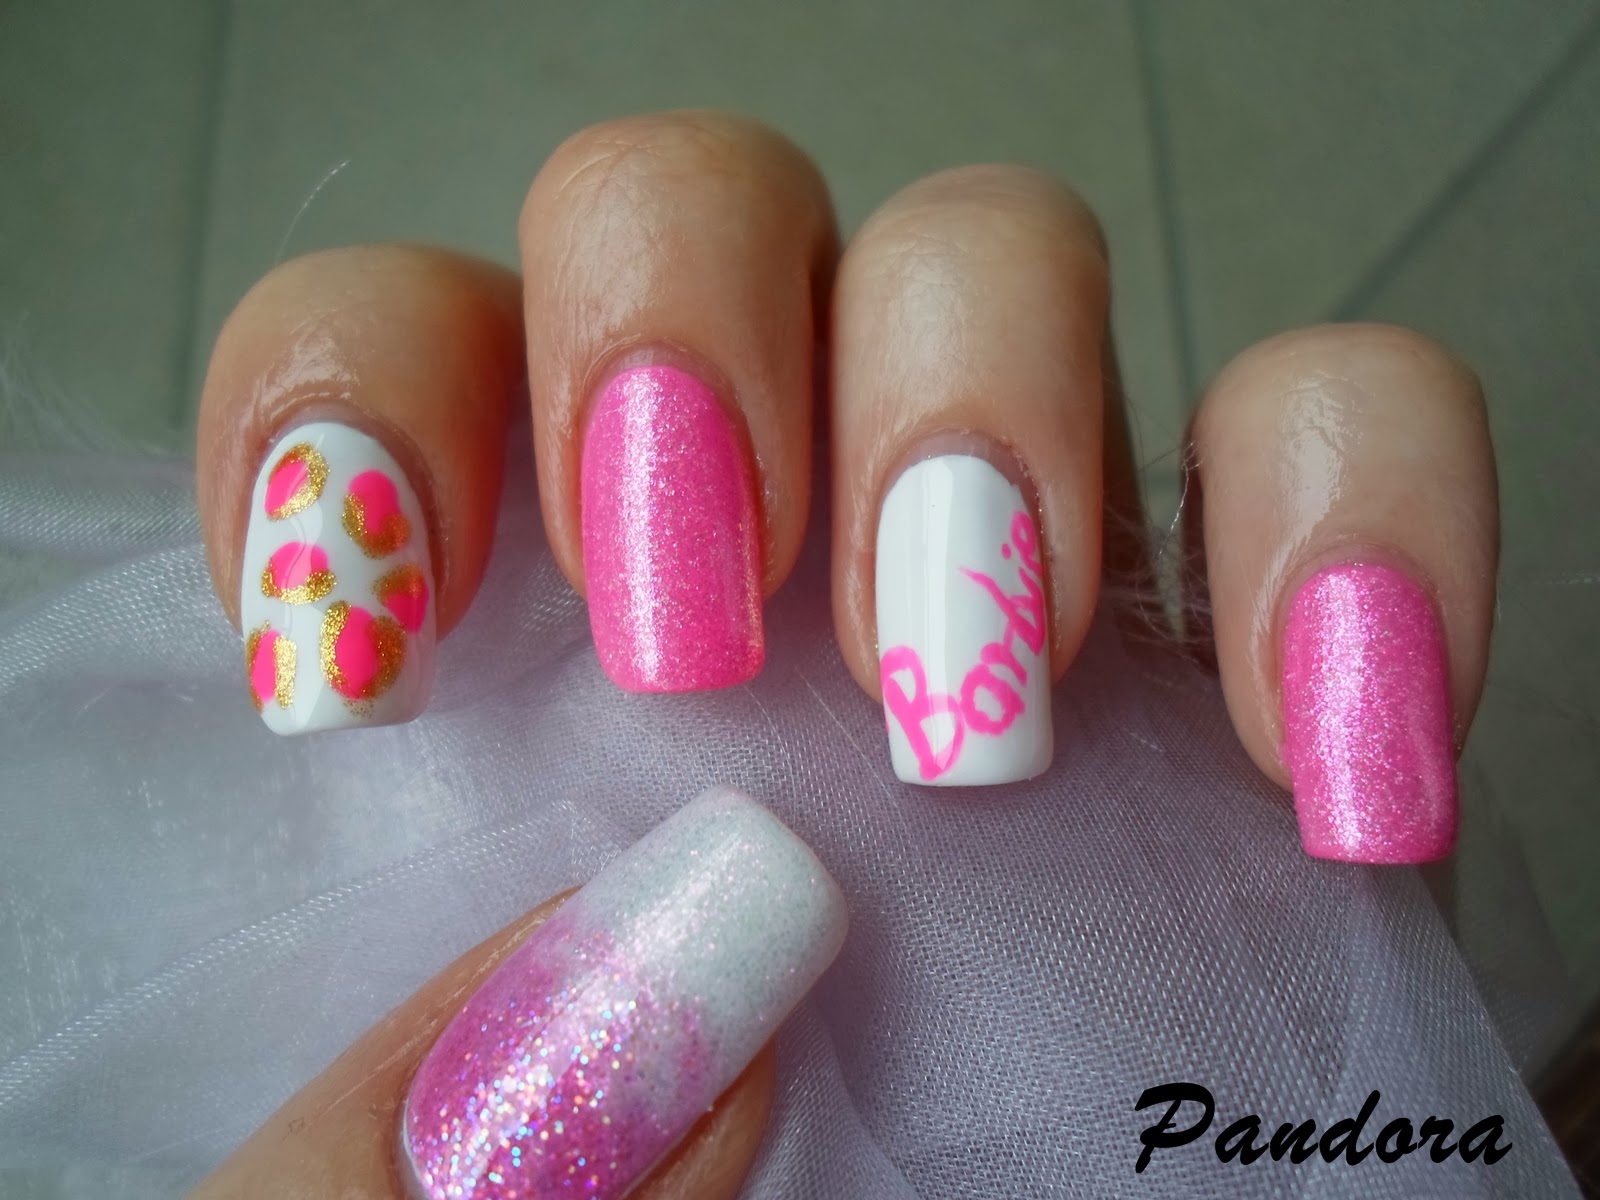 Pandora nails: Barbie nails